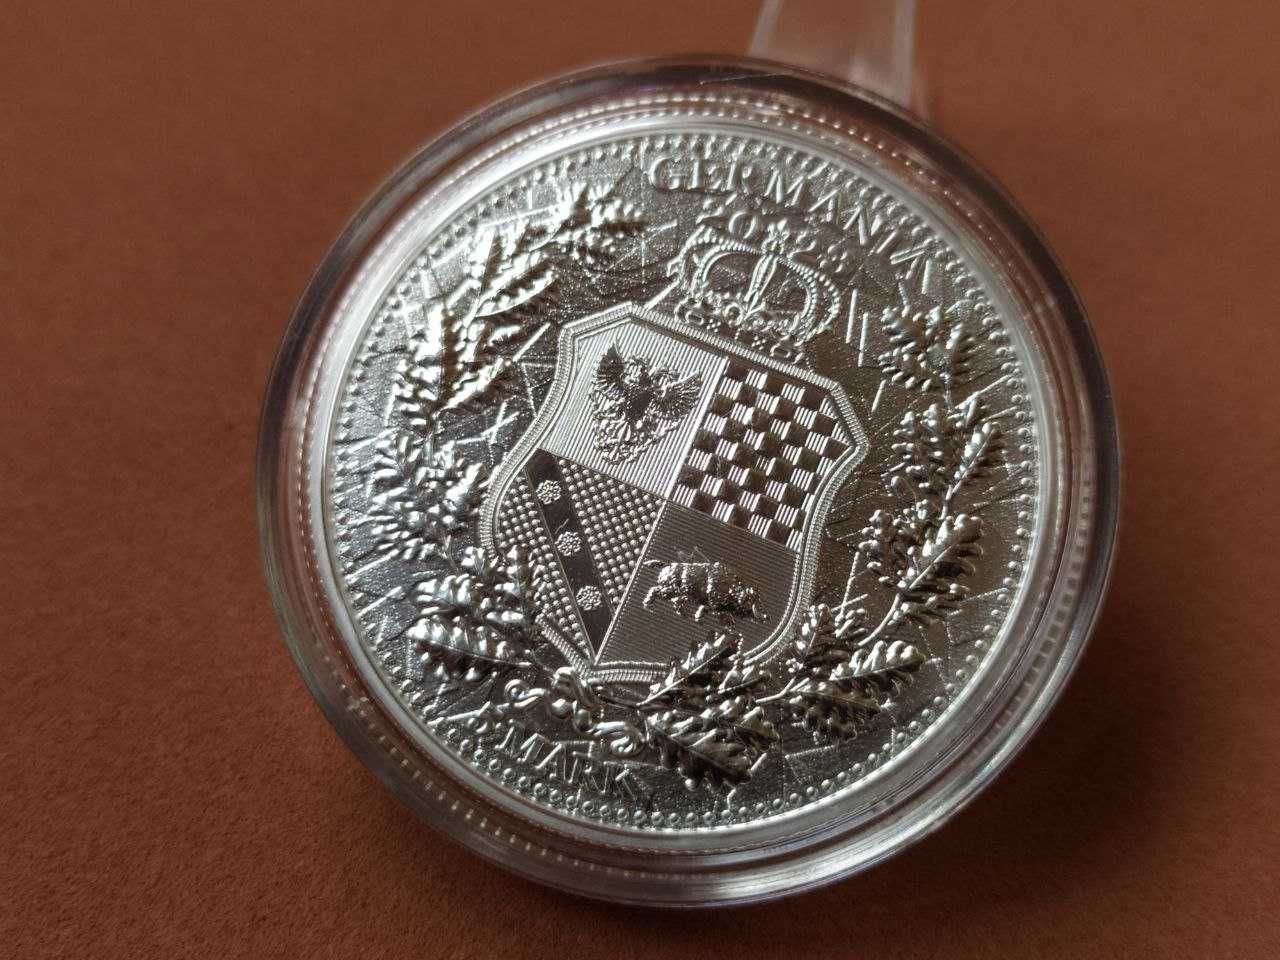 Аллегории: Галия и Германия 2023. Инвестиционная монета. Серебро 999